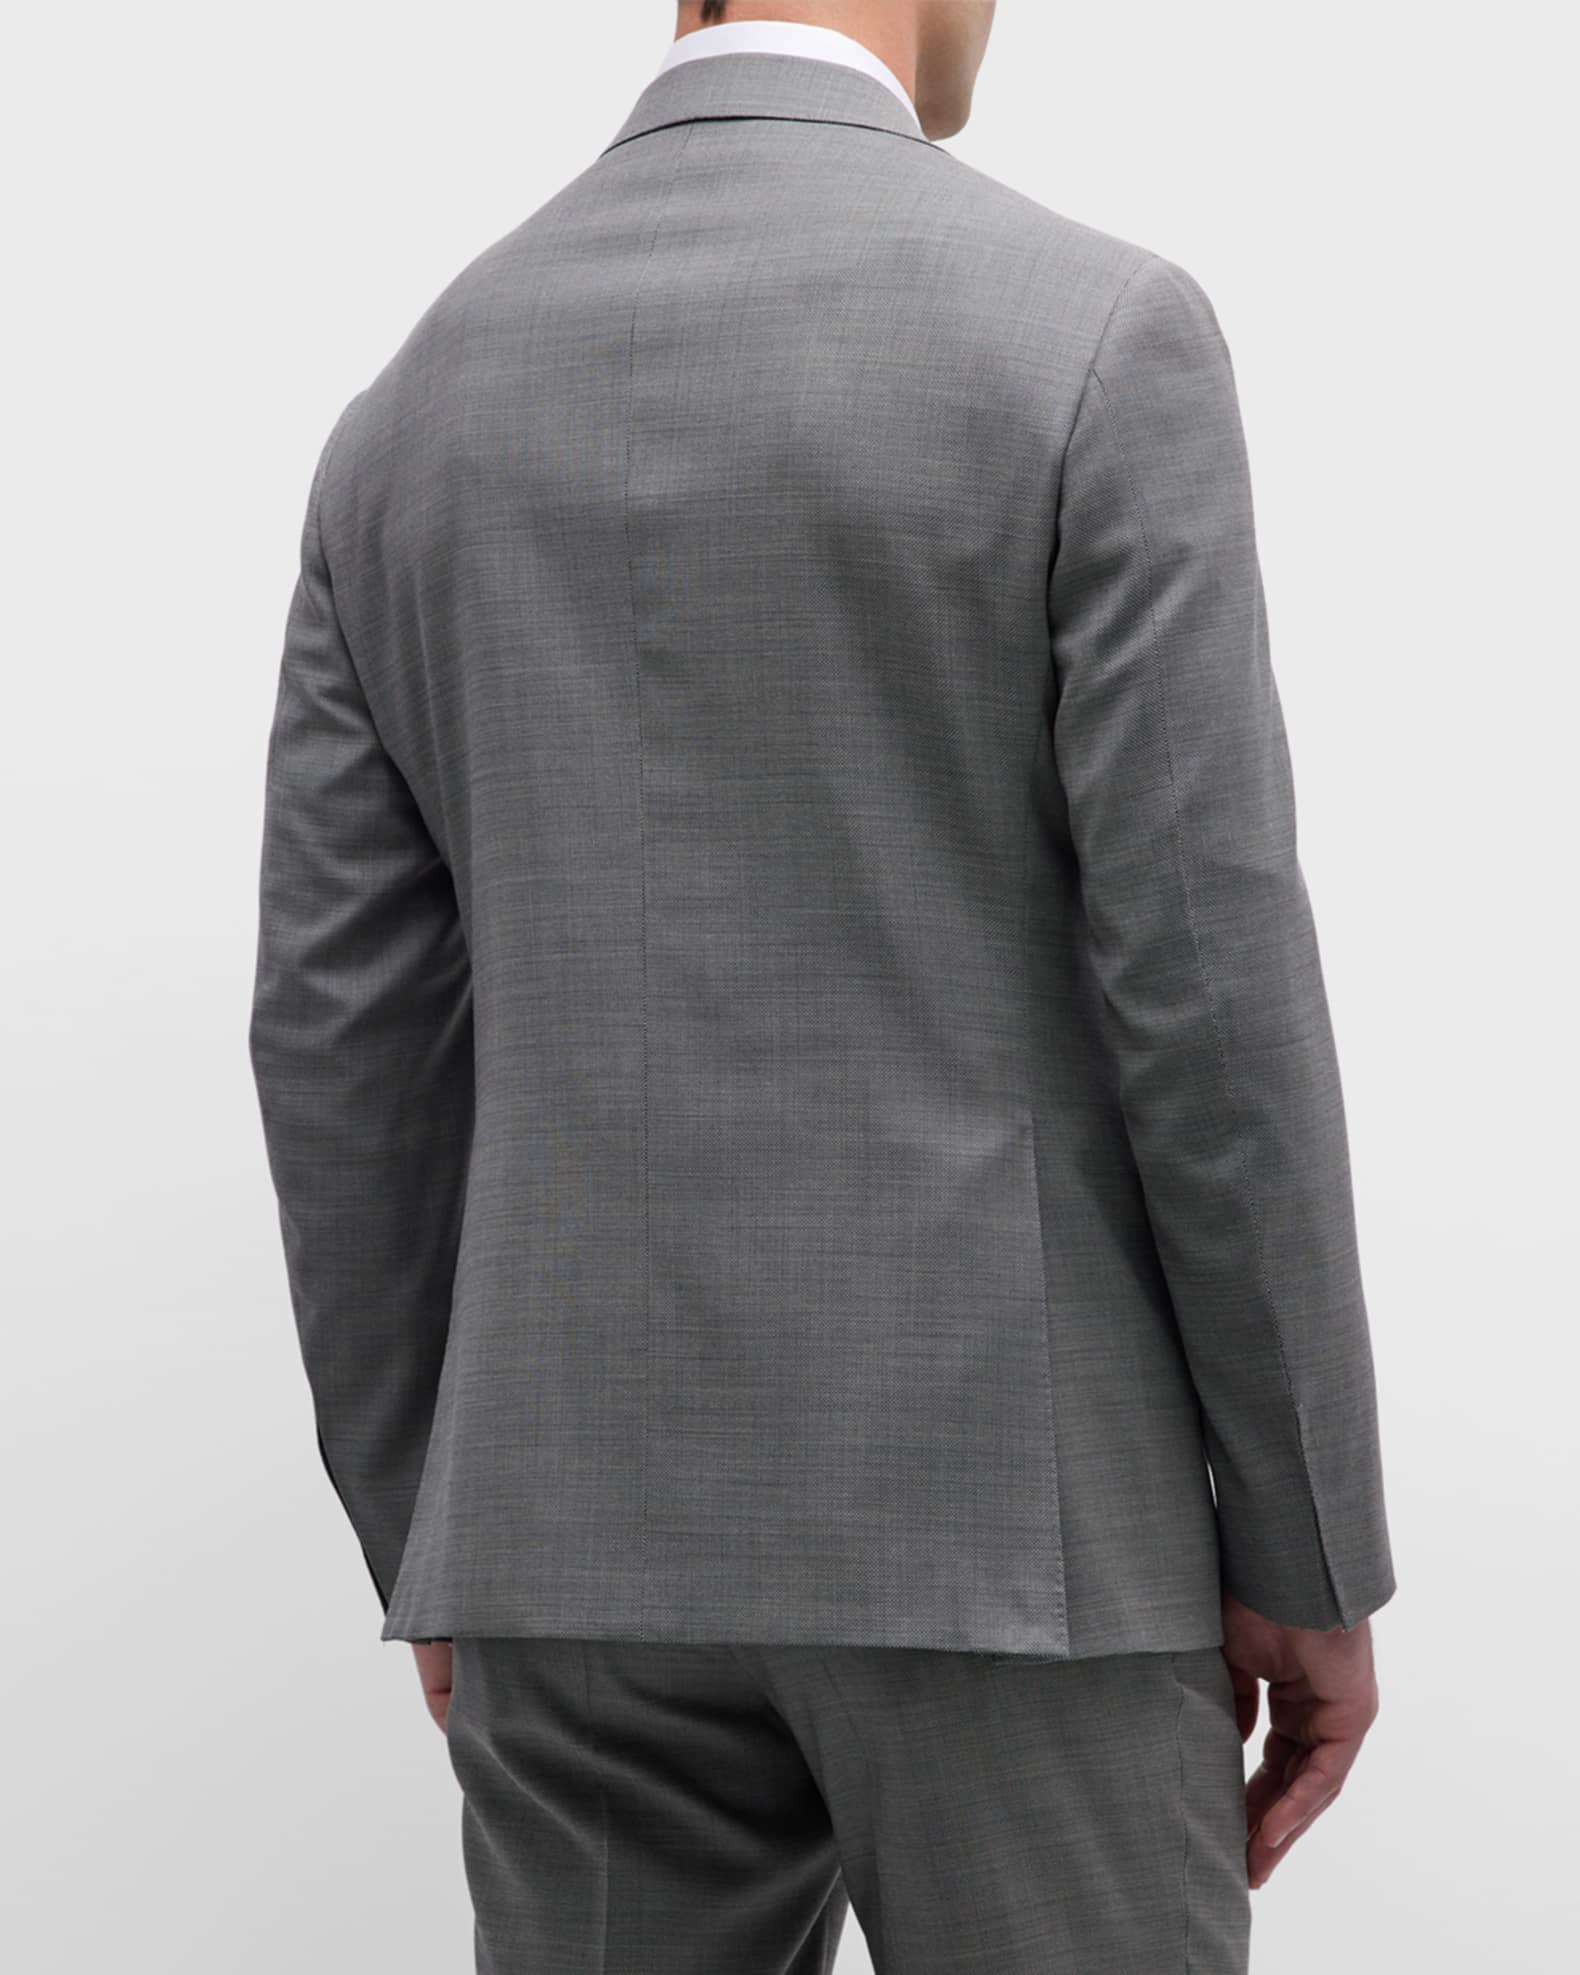 Canali Men's Micro-Geometric Wool Suit | Neiman Marcus